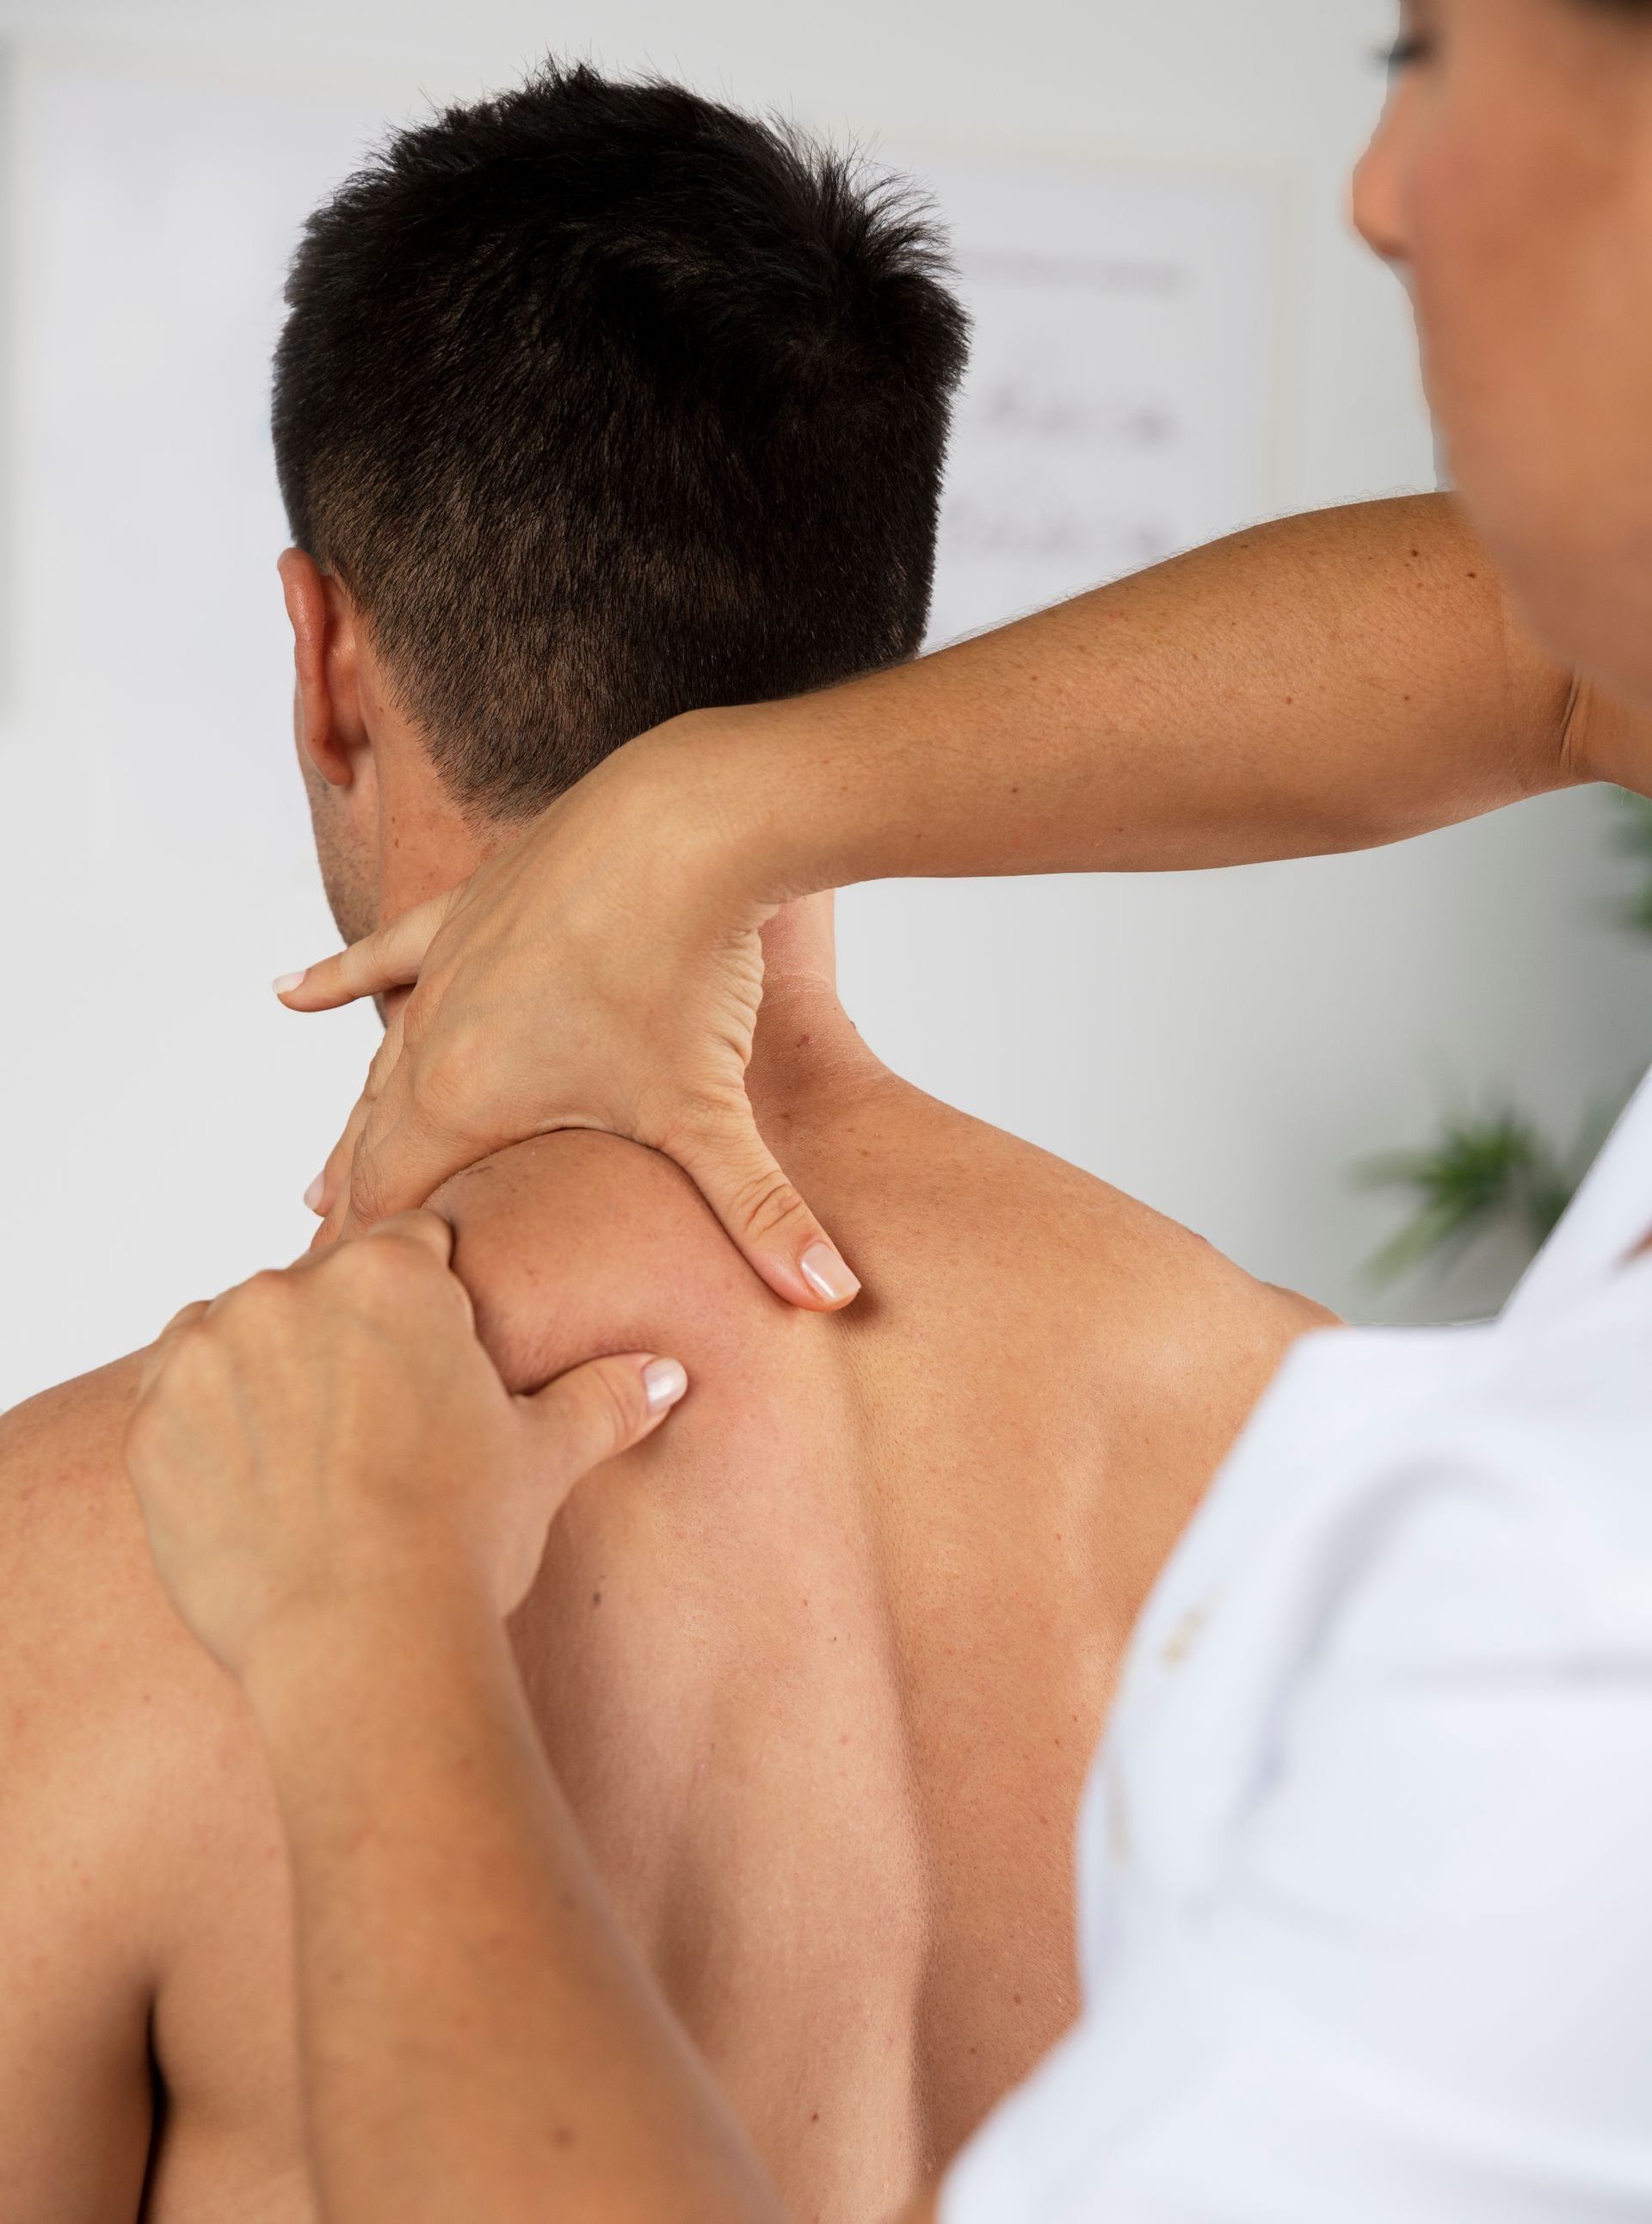 chiropractor performing massage